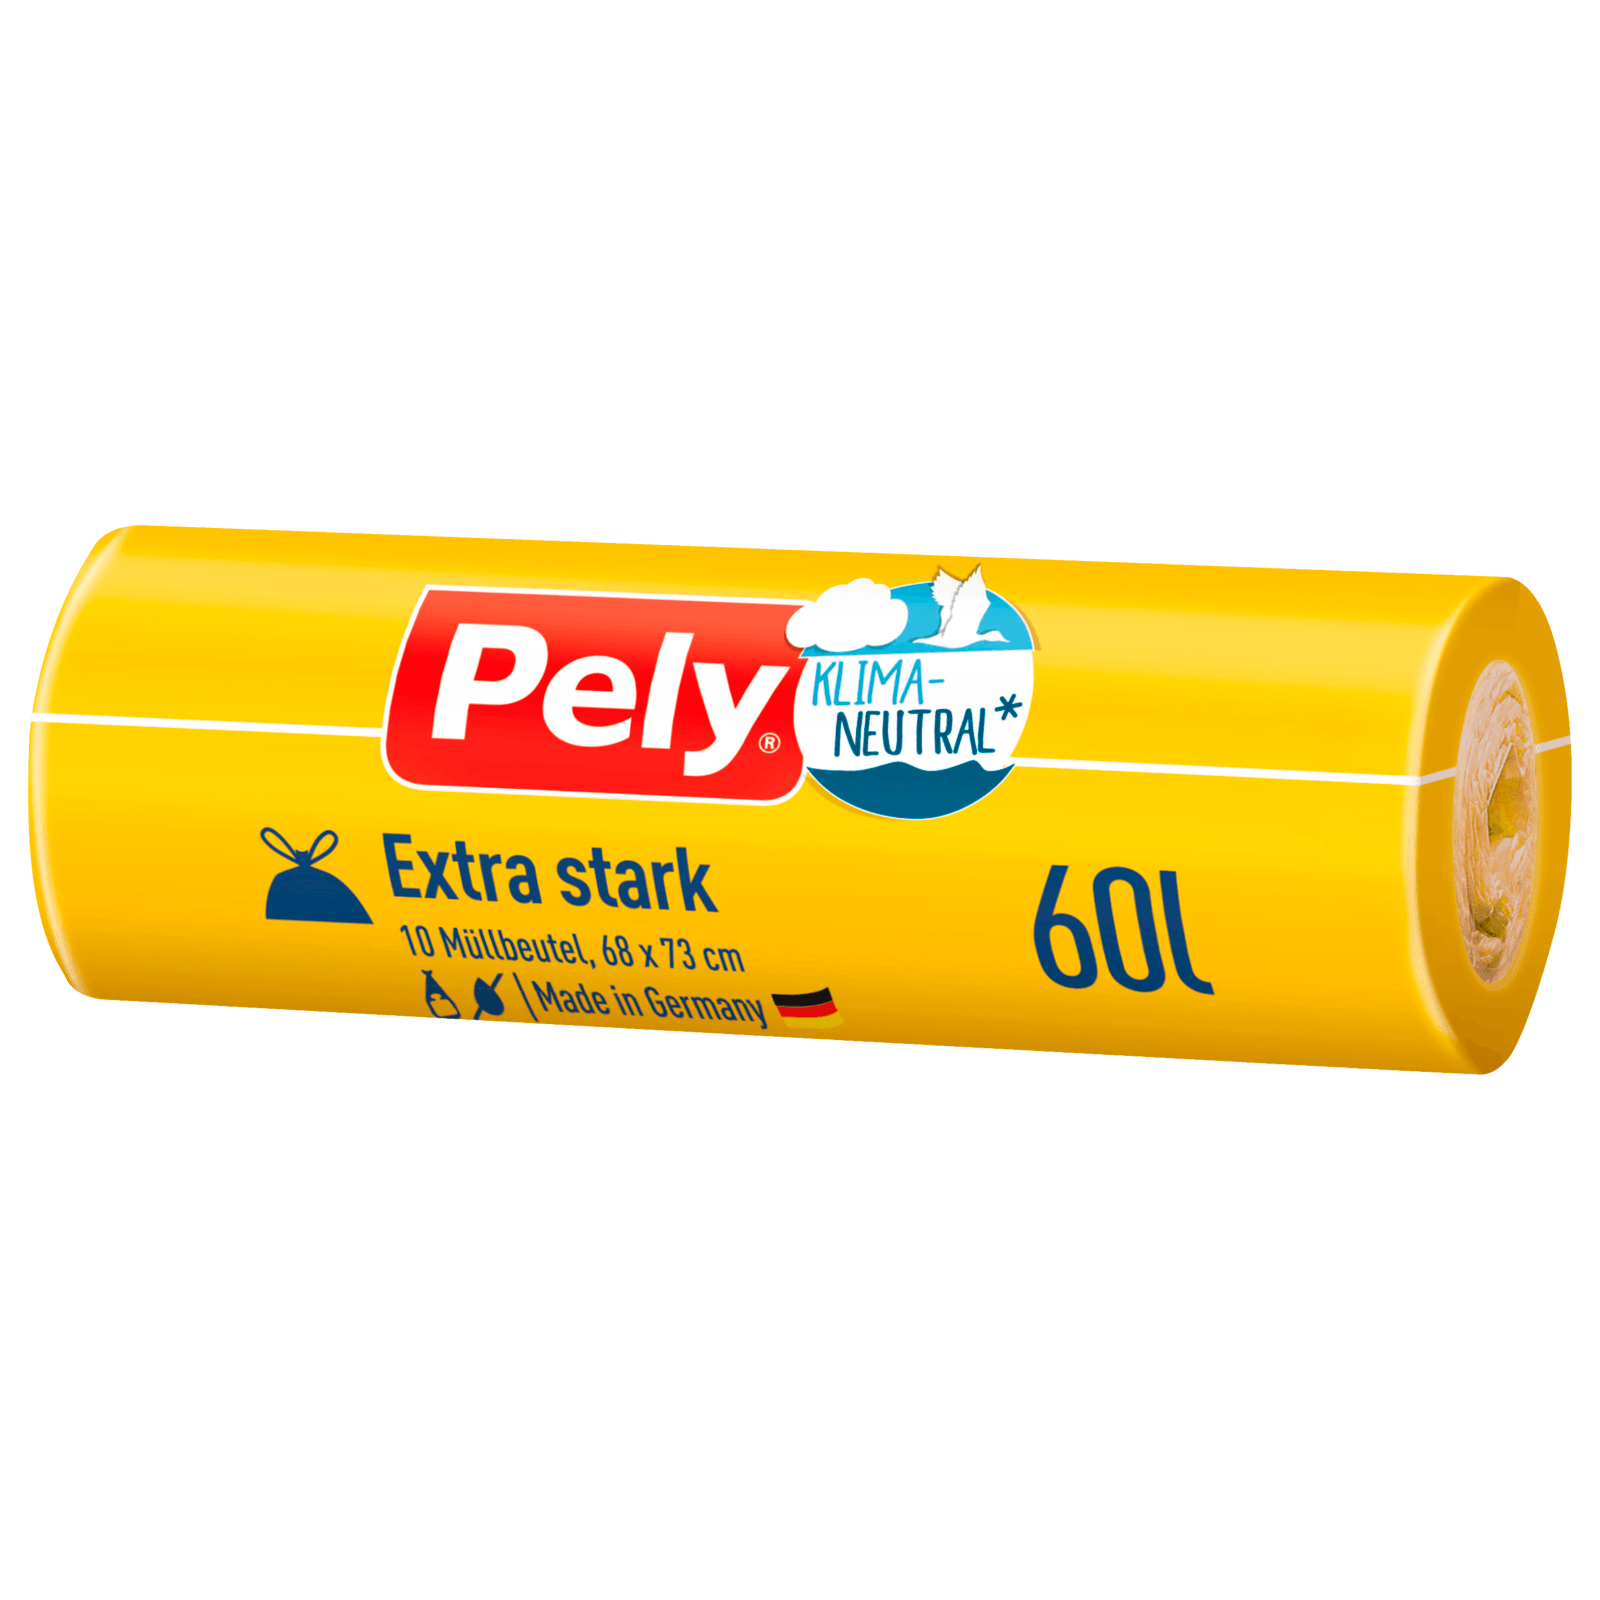 Pely Müllbeutel Extra stark 60l, 10 Stück bei REWE online bestellen!